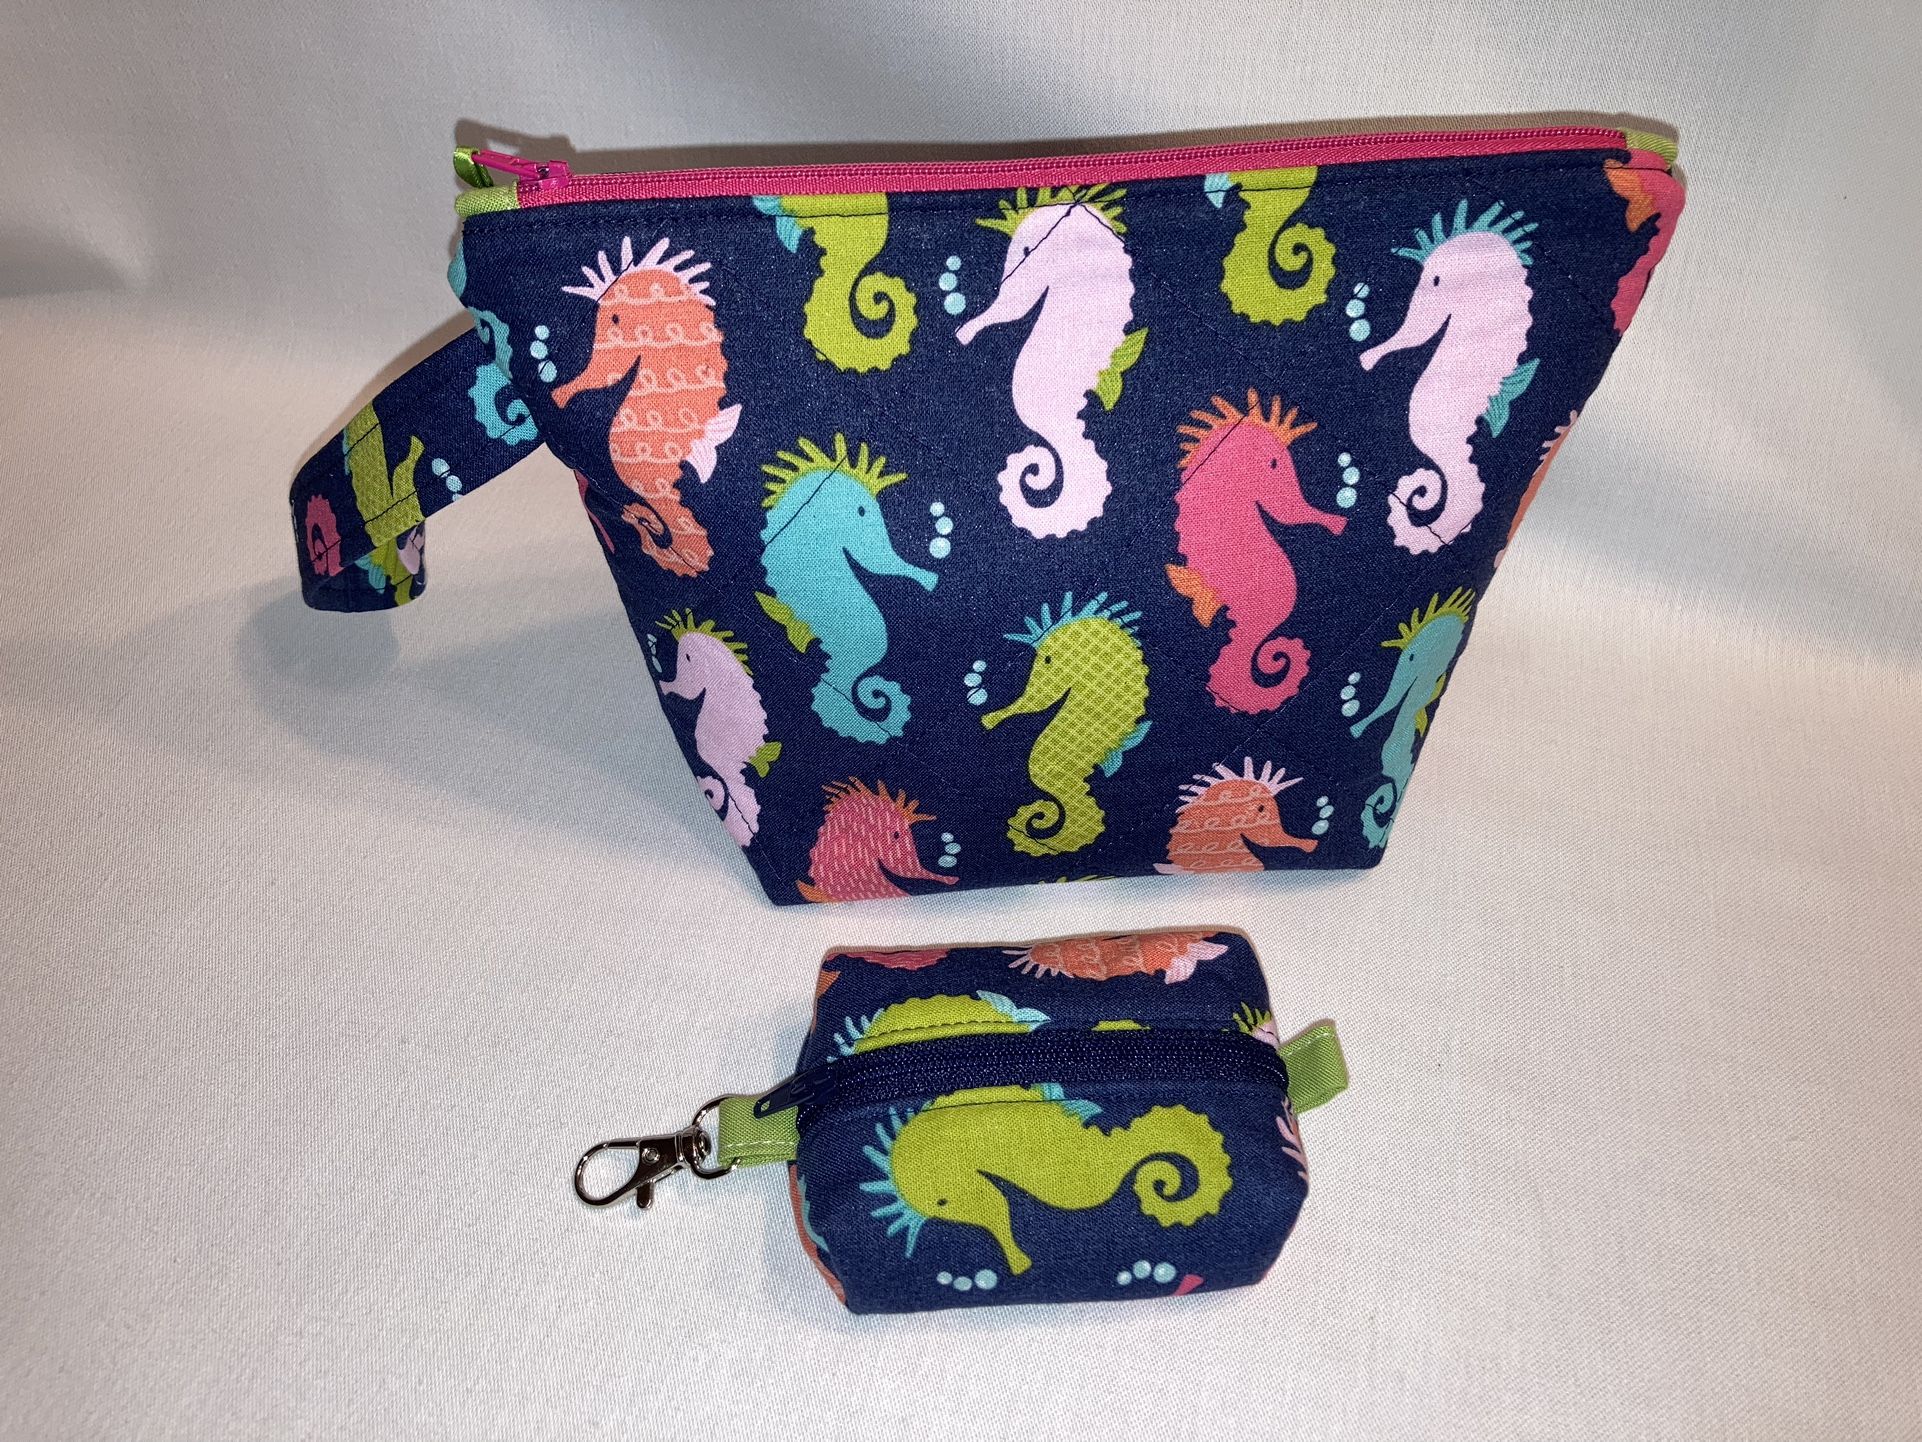 Handbag Set, Zipper Pouch, Coin Purse, Makeup/ Toiletry Bag. Colorful Seahorses